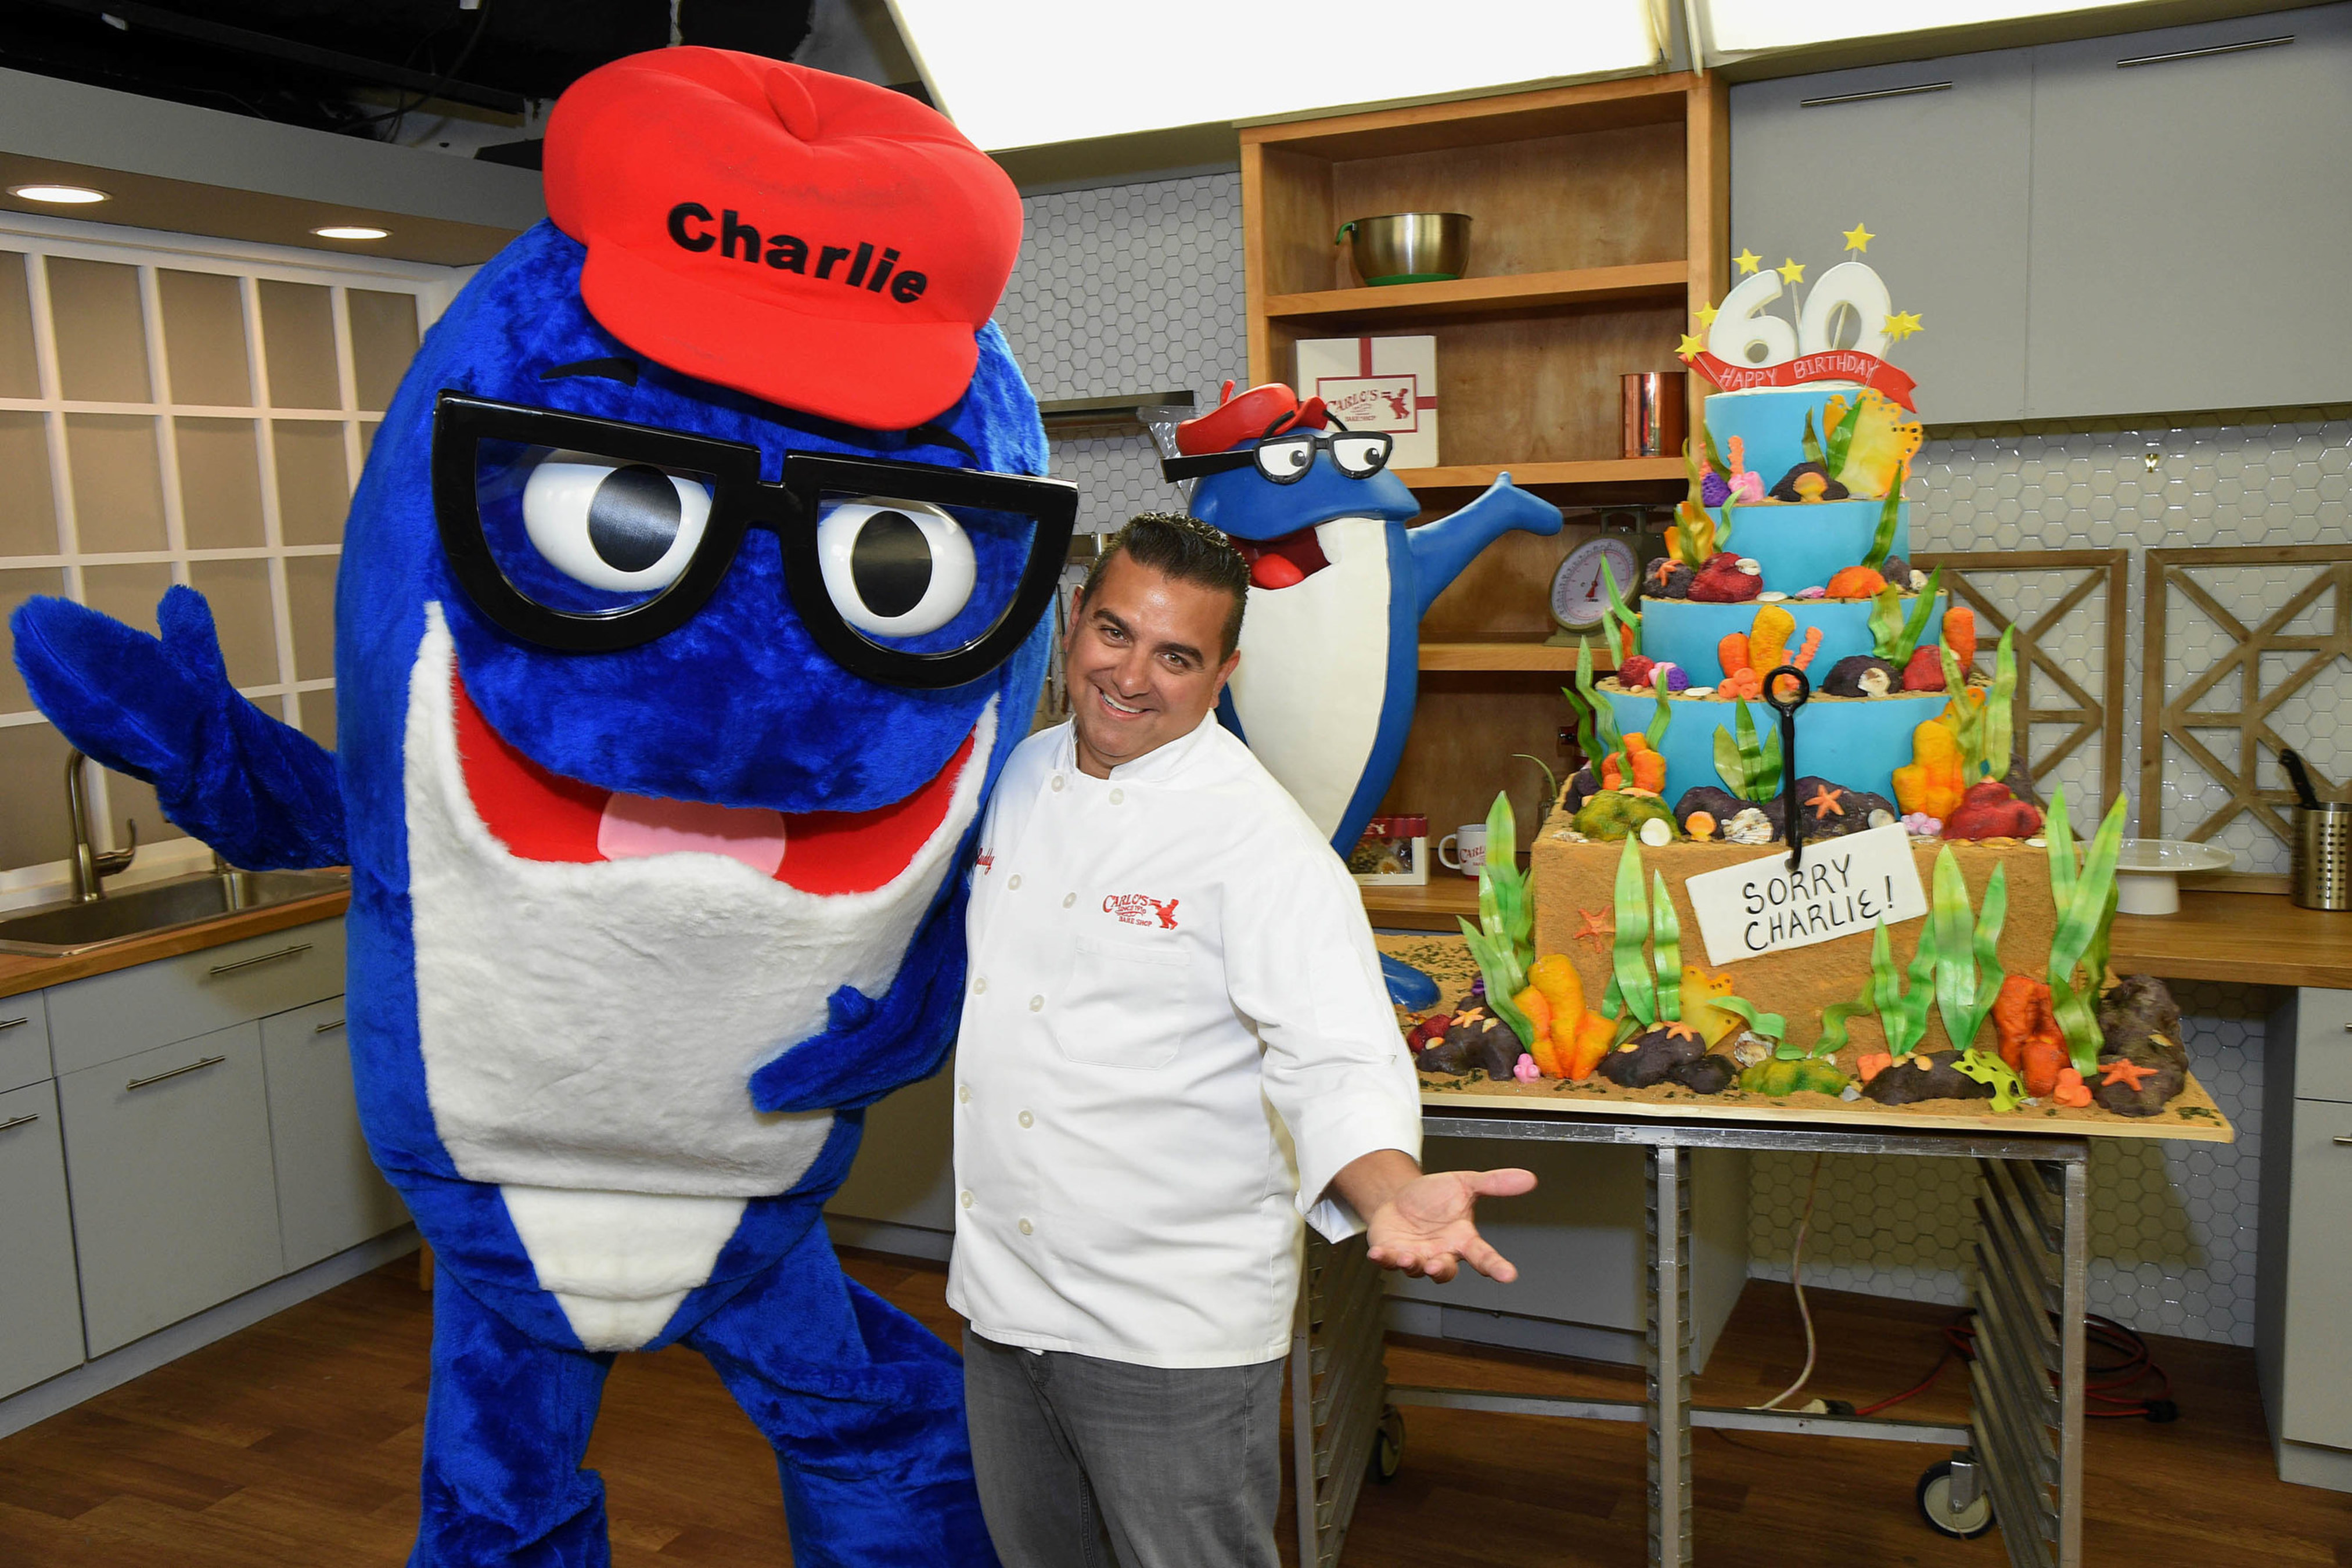 StarKist Celebrates Mascot Charlie Turning 60